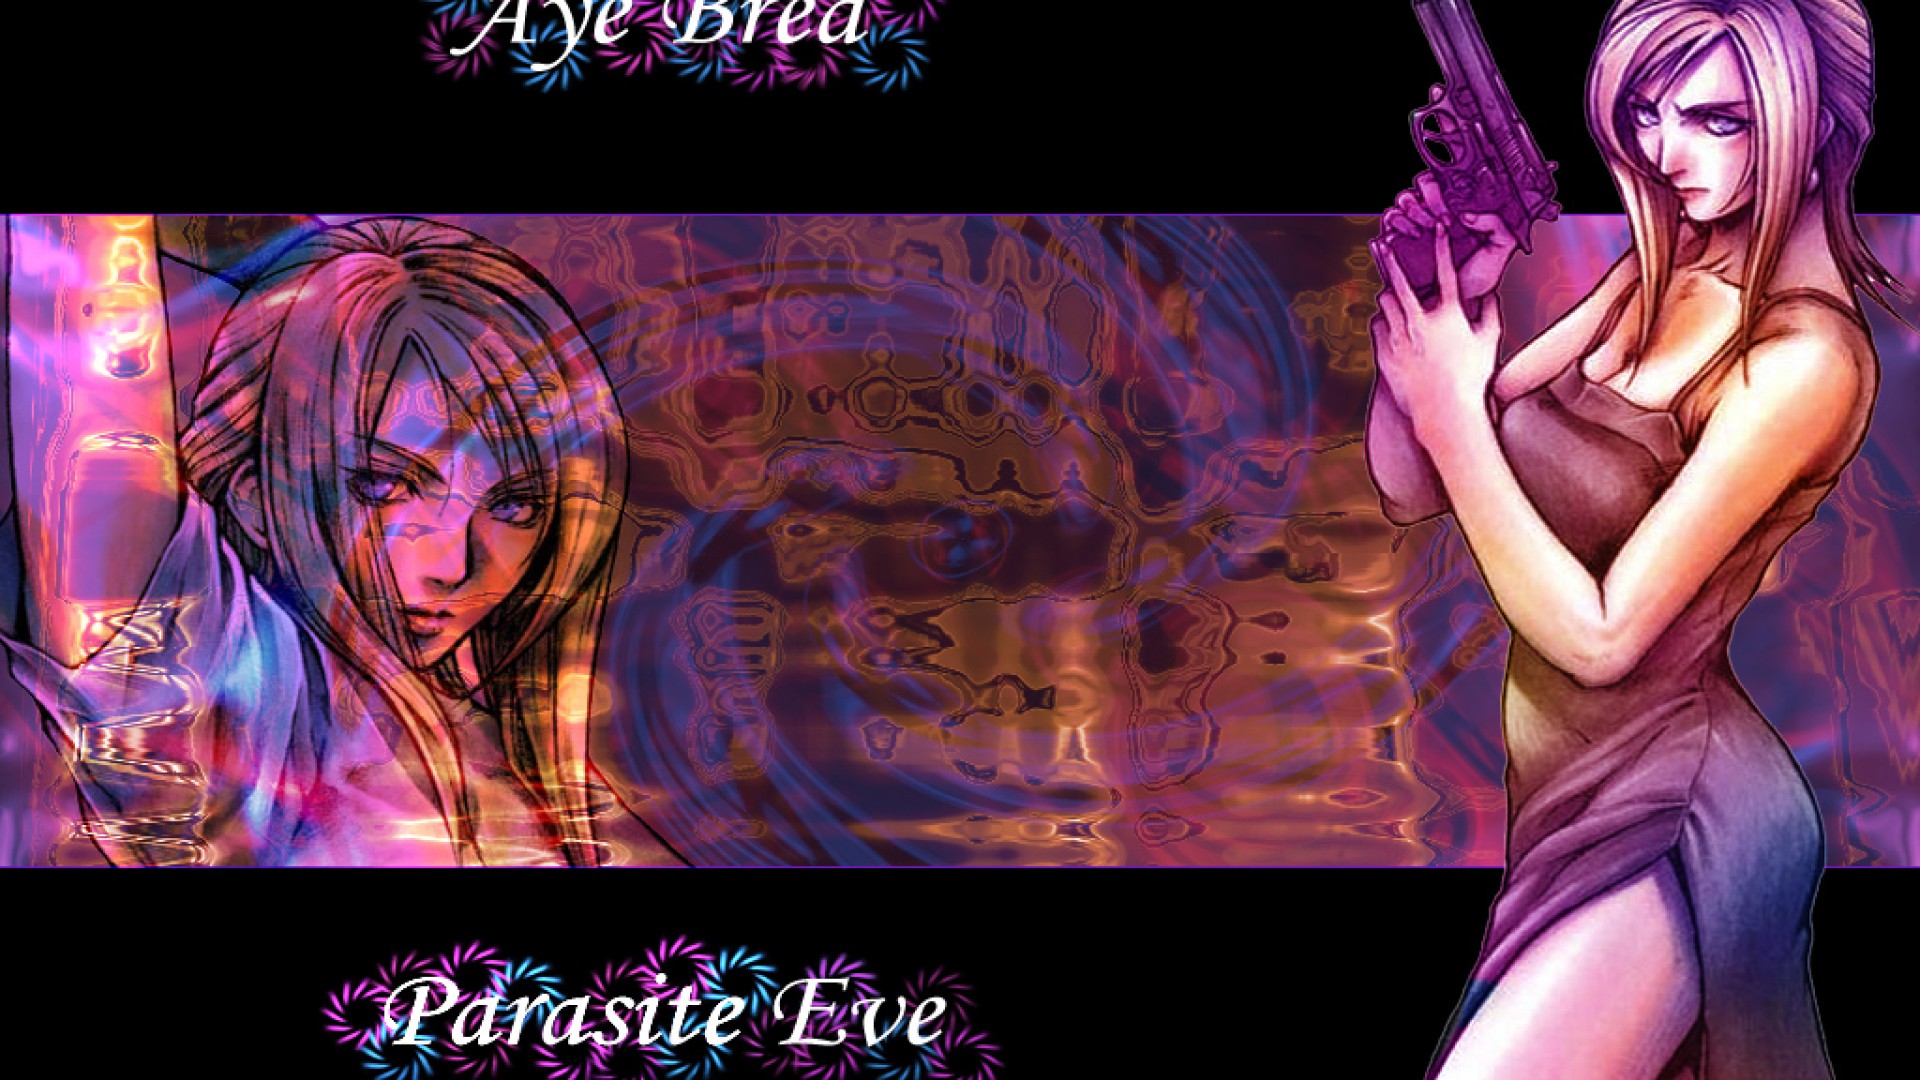 Video Game Parasite Eve HD Wallpaper by Tetsuya Nomura